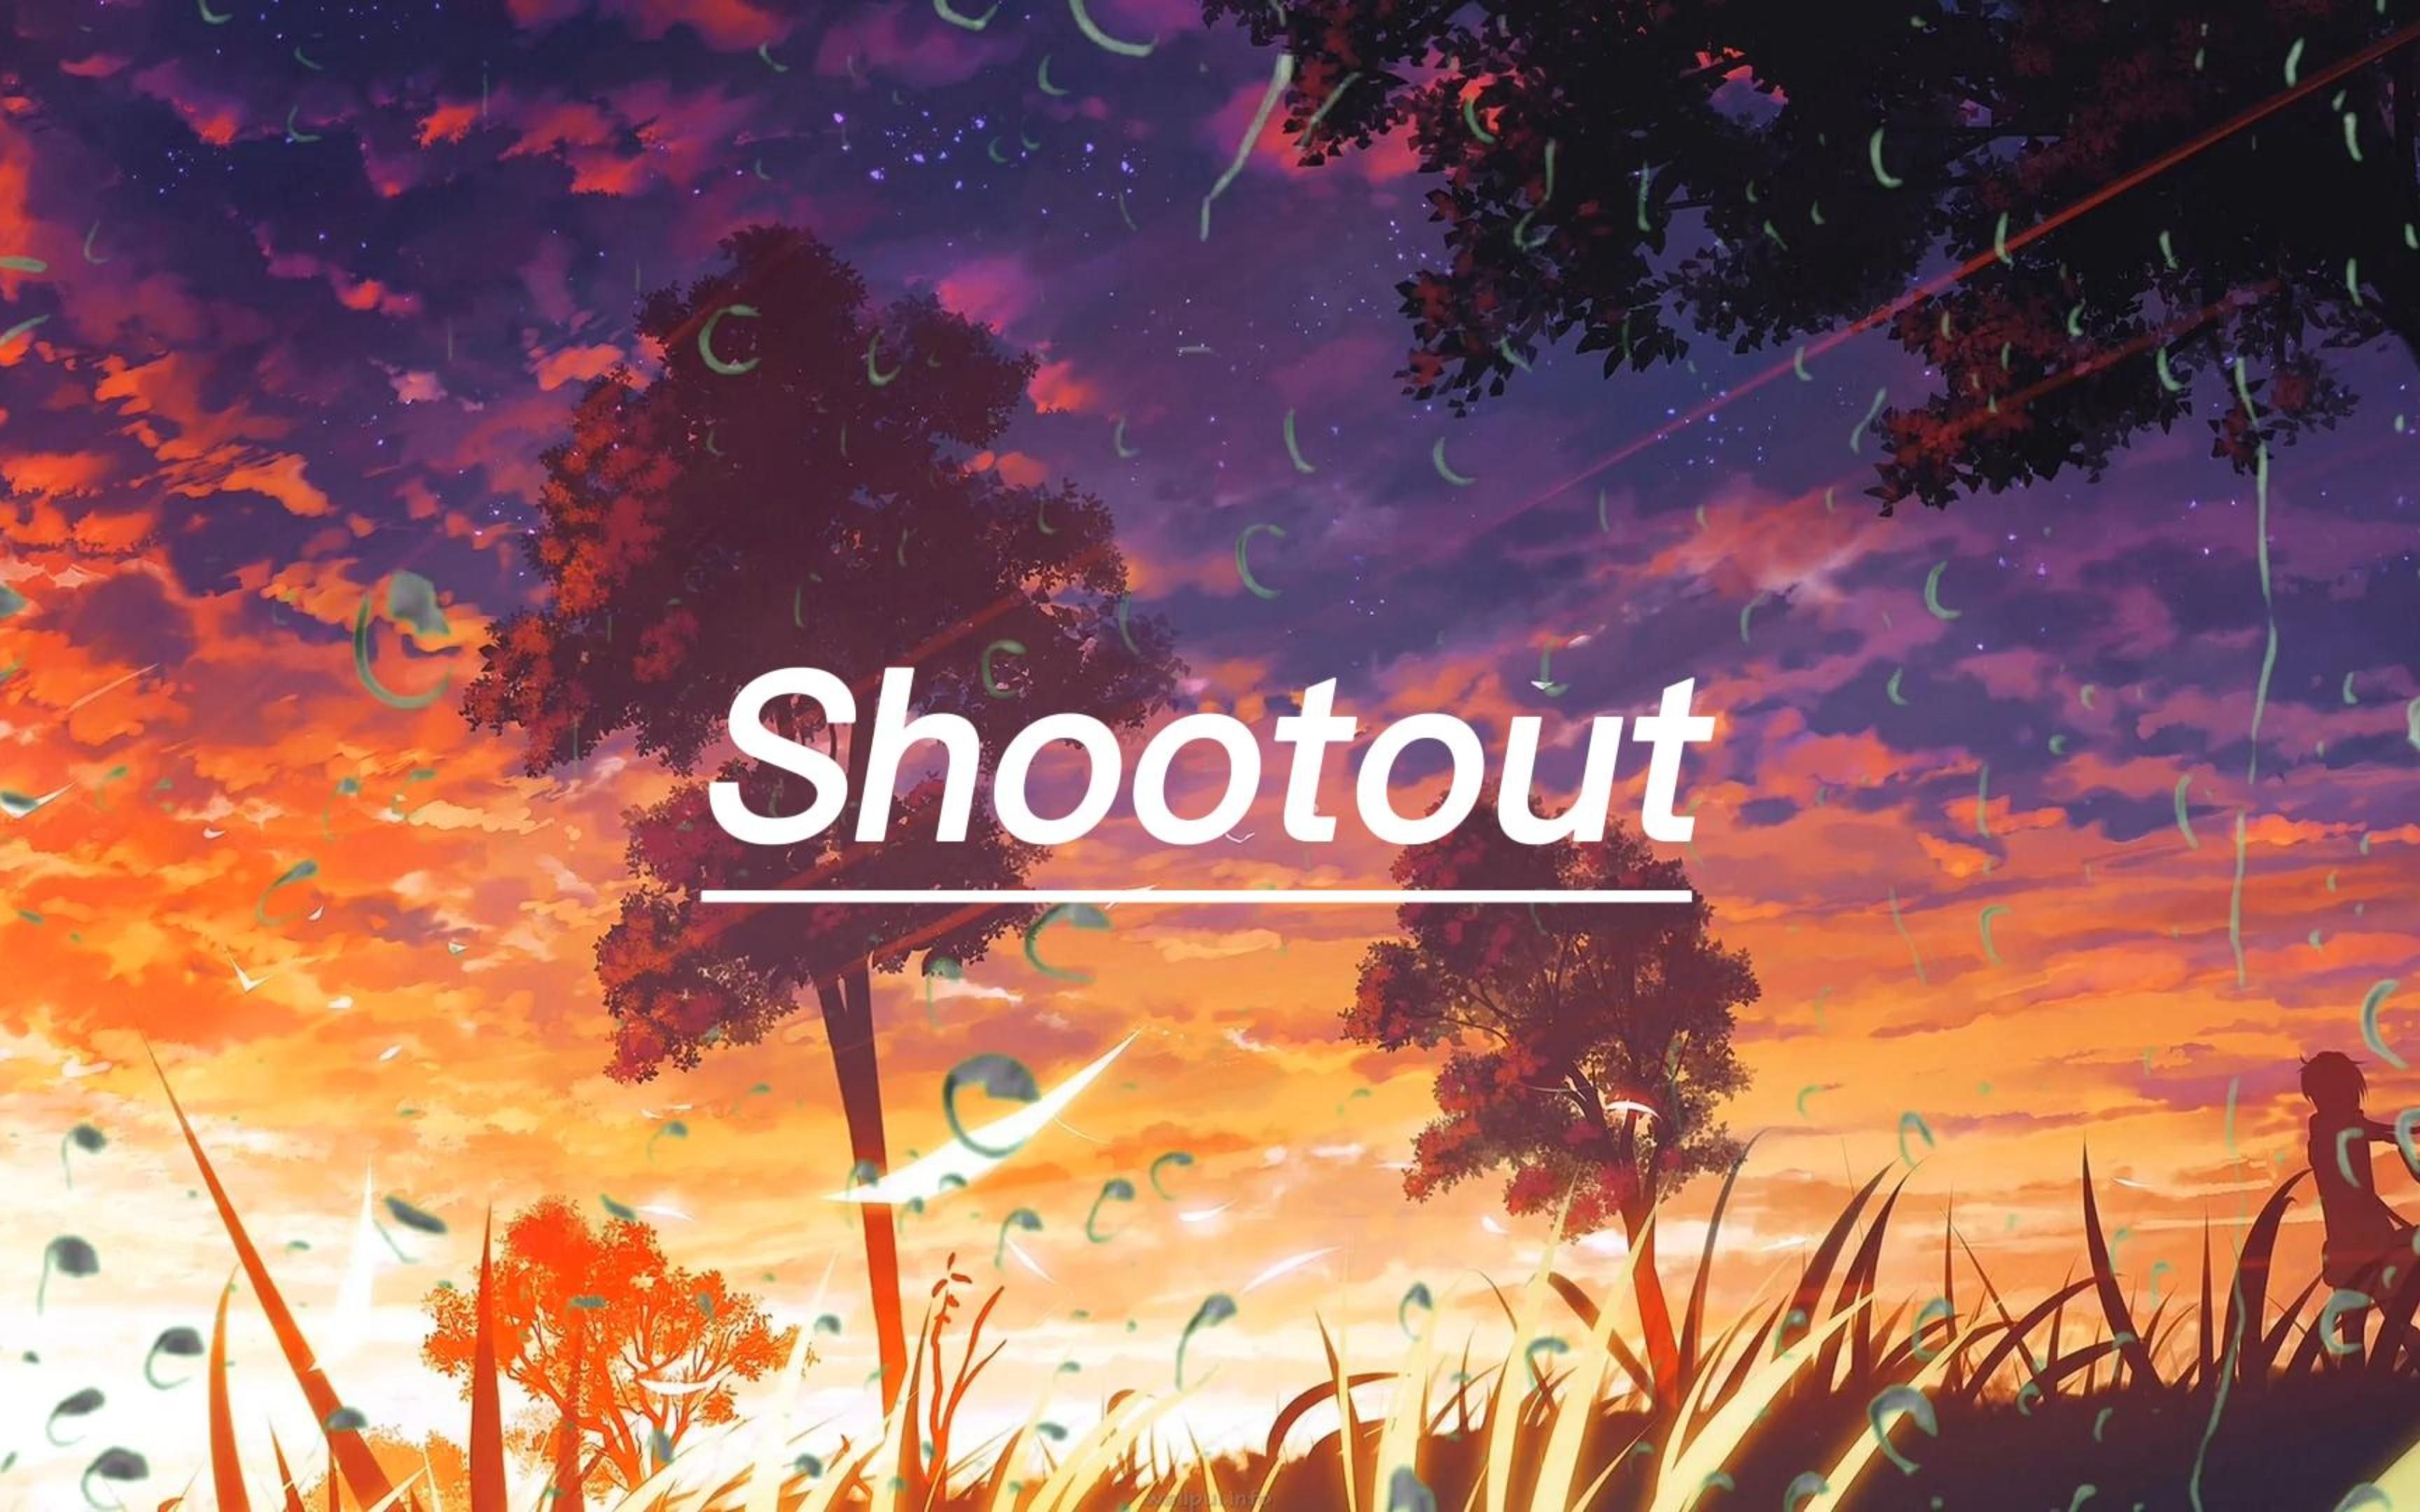 《Shootout》，“我不小心打碎了生活，无法自拔”